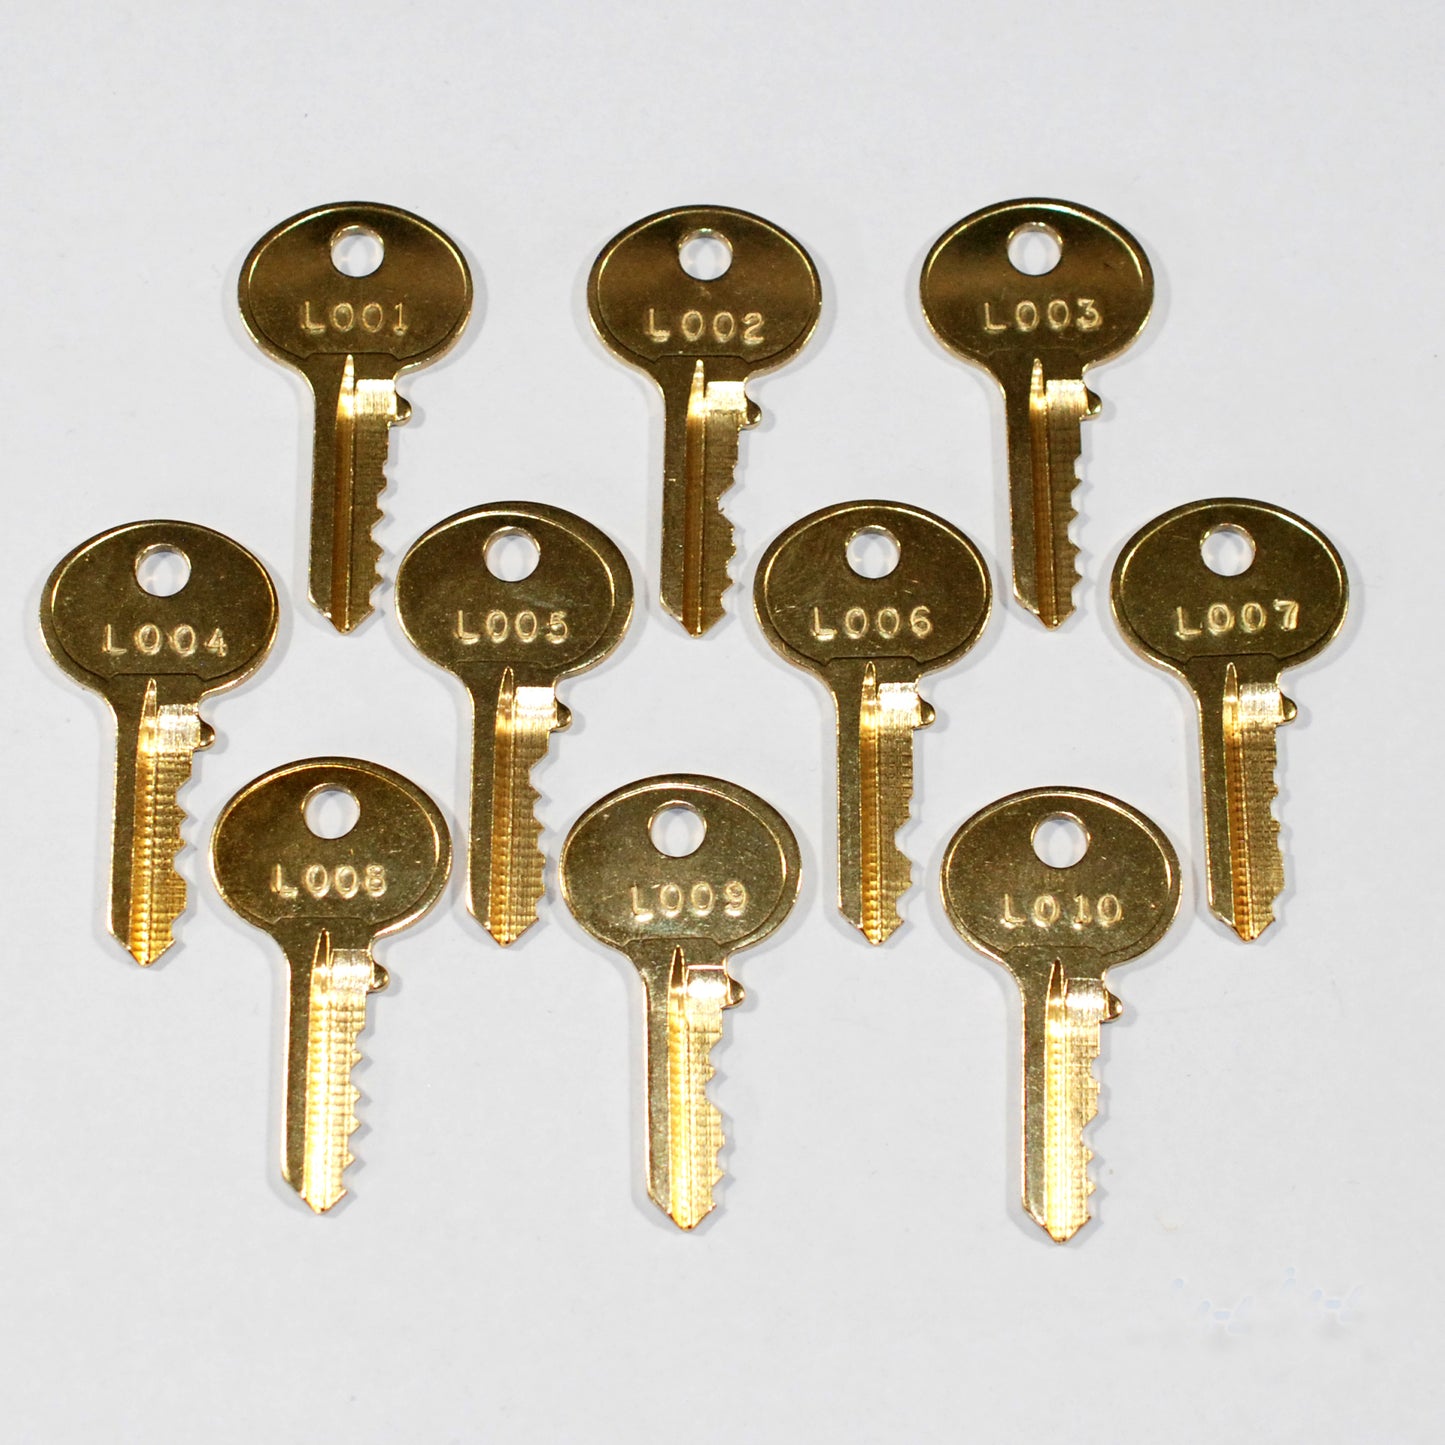 10 Hudson Pentesting Key Set ~ For HON File Cabinet Desk Lock L001 - L010